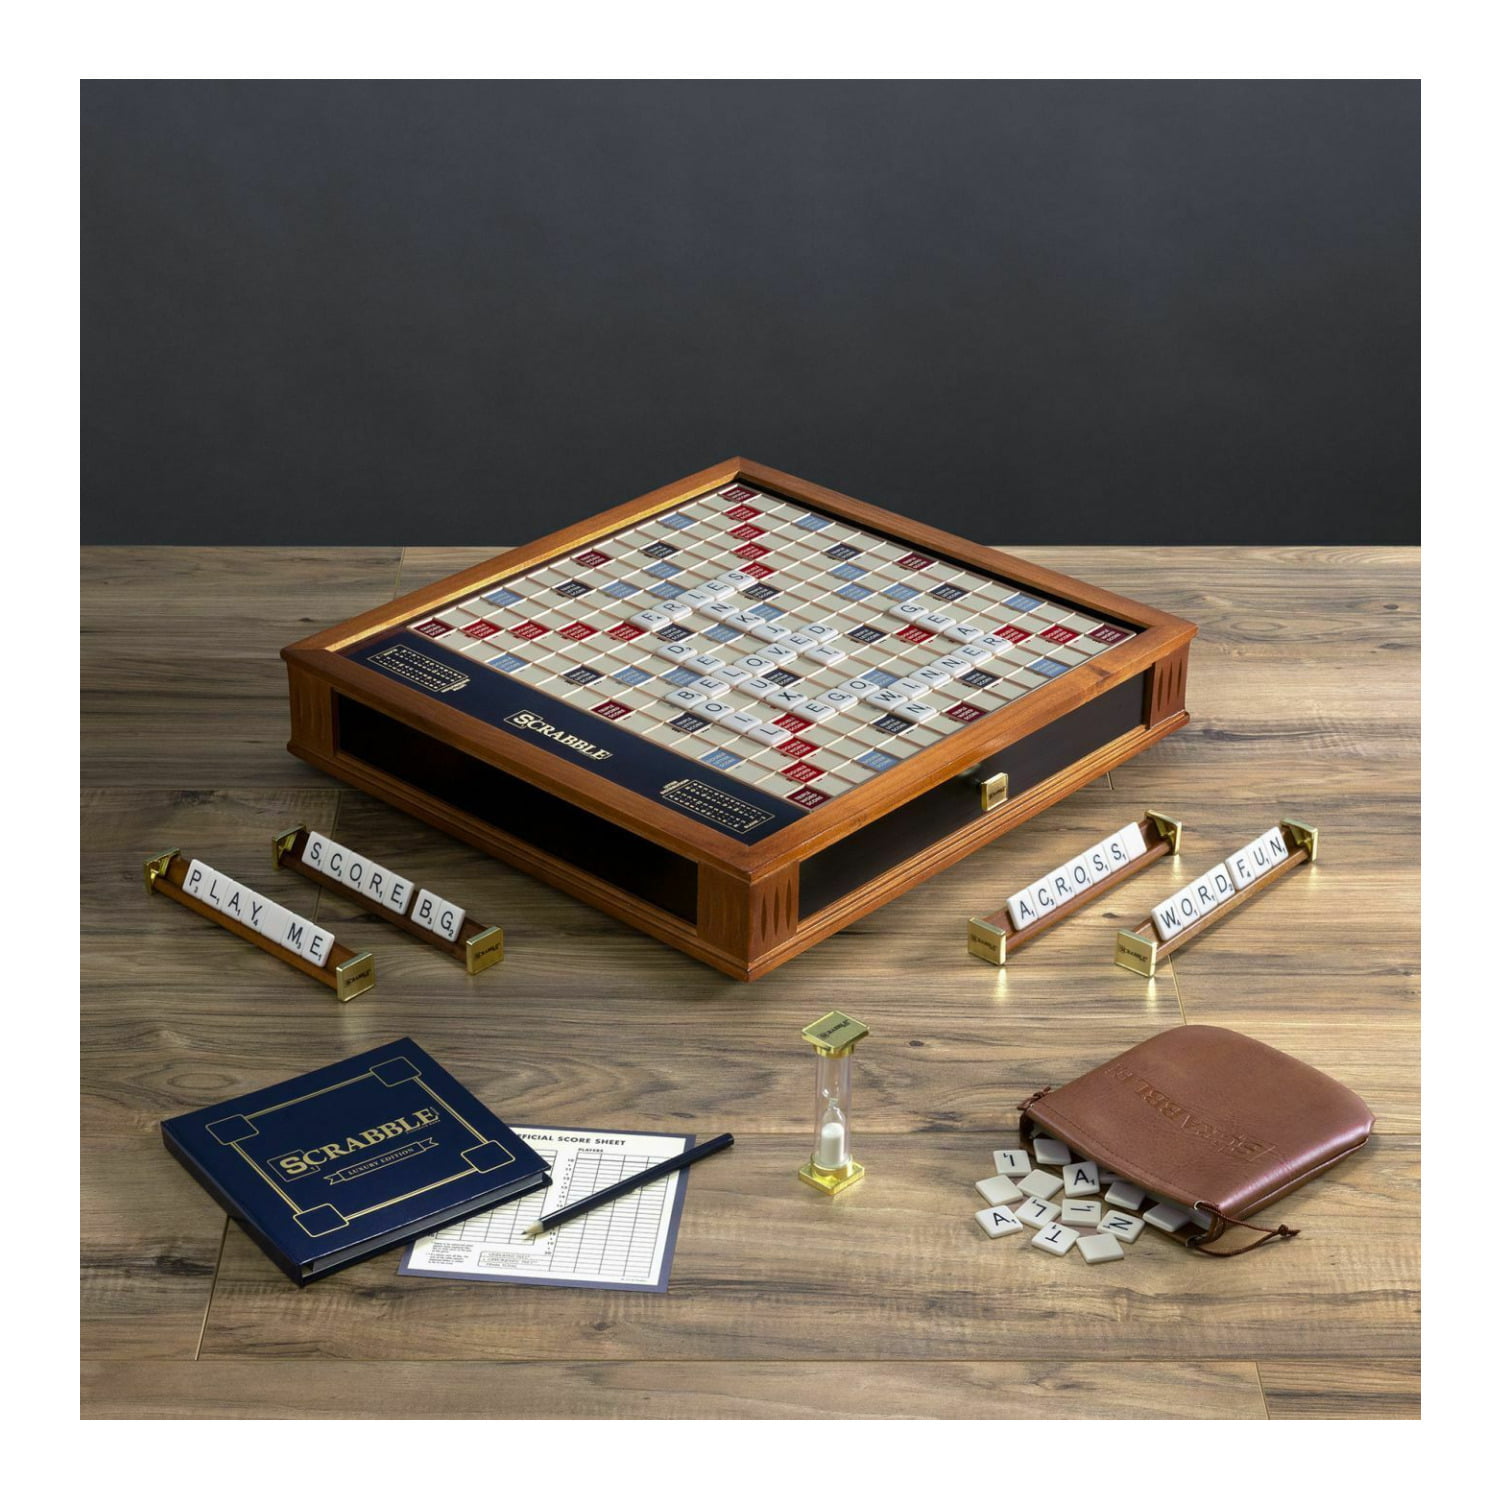 Scrabble Luxury Edition – Hasbro Pulse